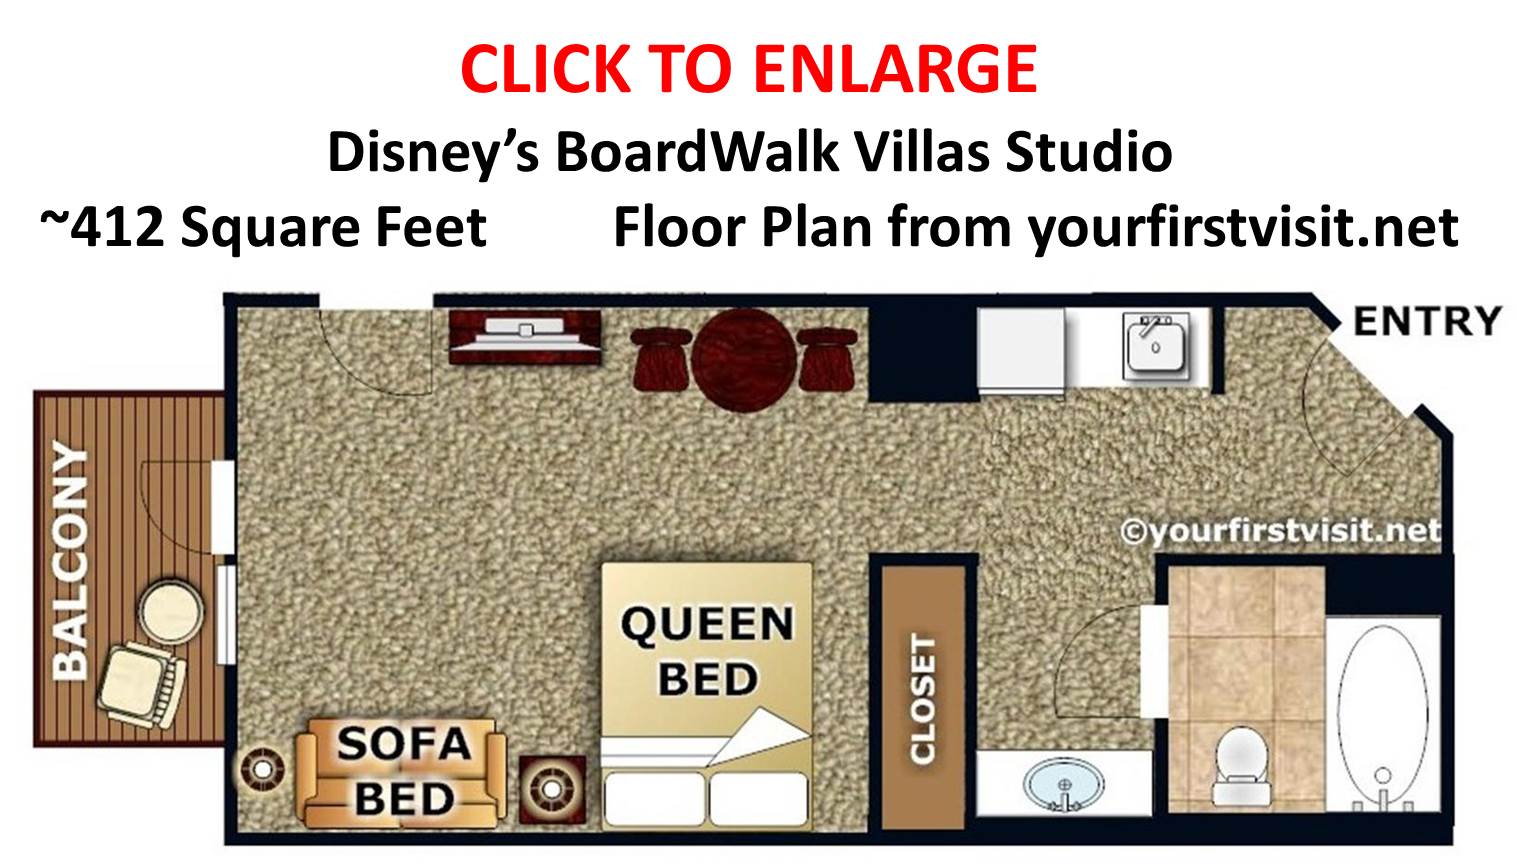 Photo Tour of a Studio at Disney's BoardWalk Villas